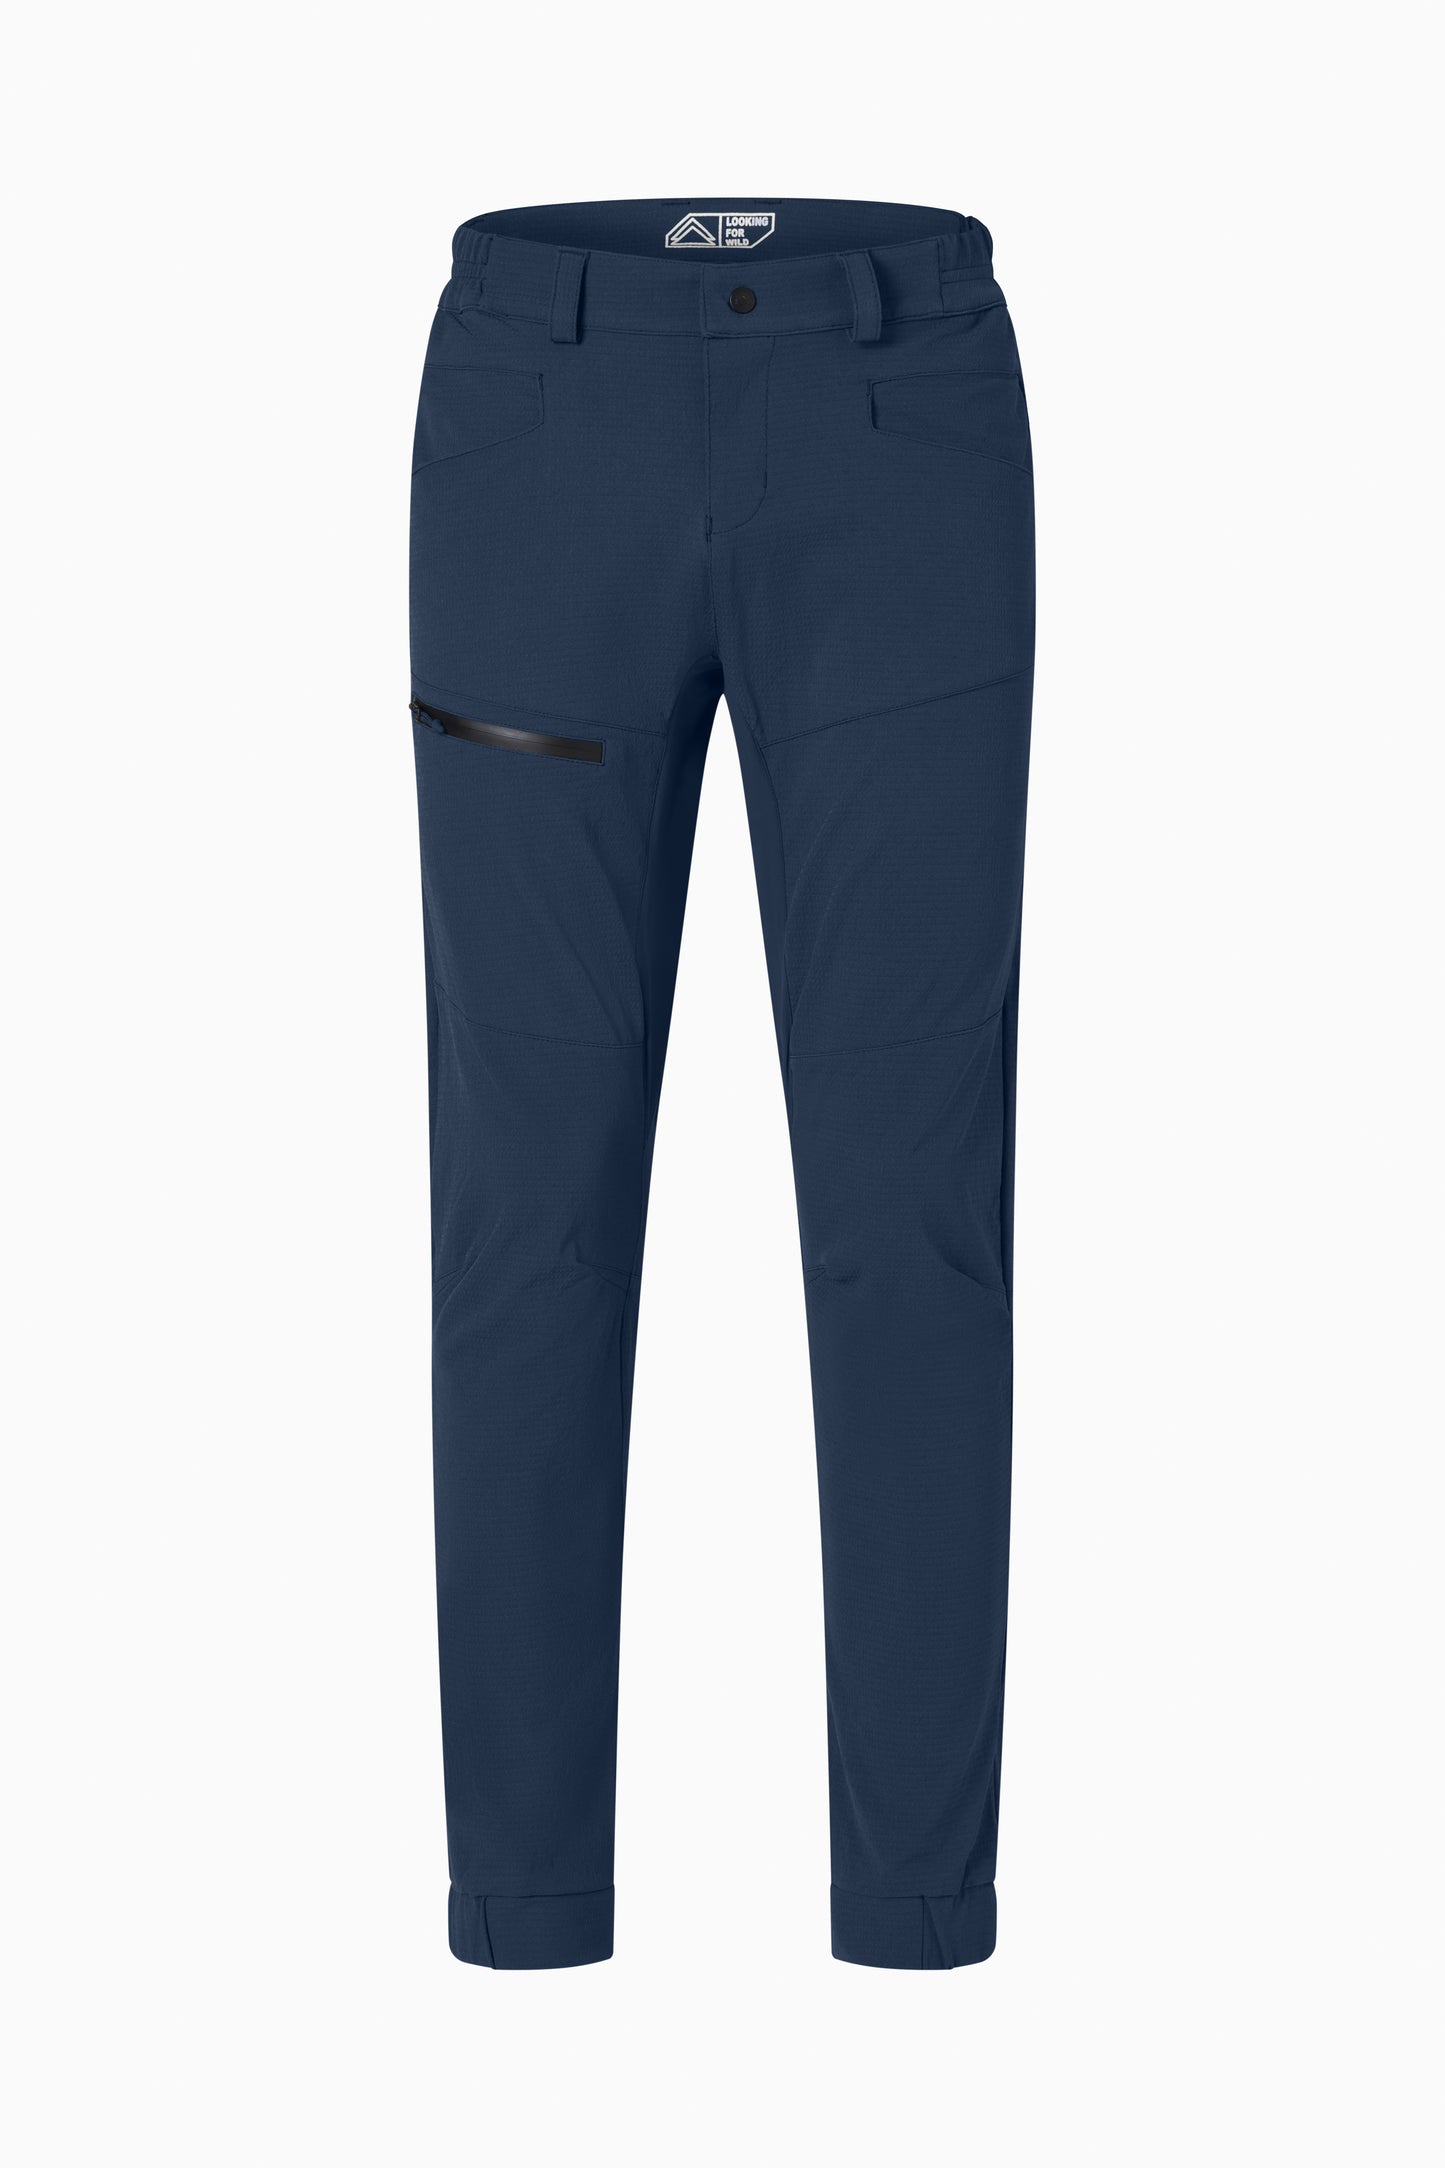 Pantalon F208 Homme TWILIGHT BLUE en Nylon Ripstop